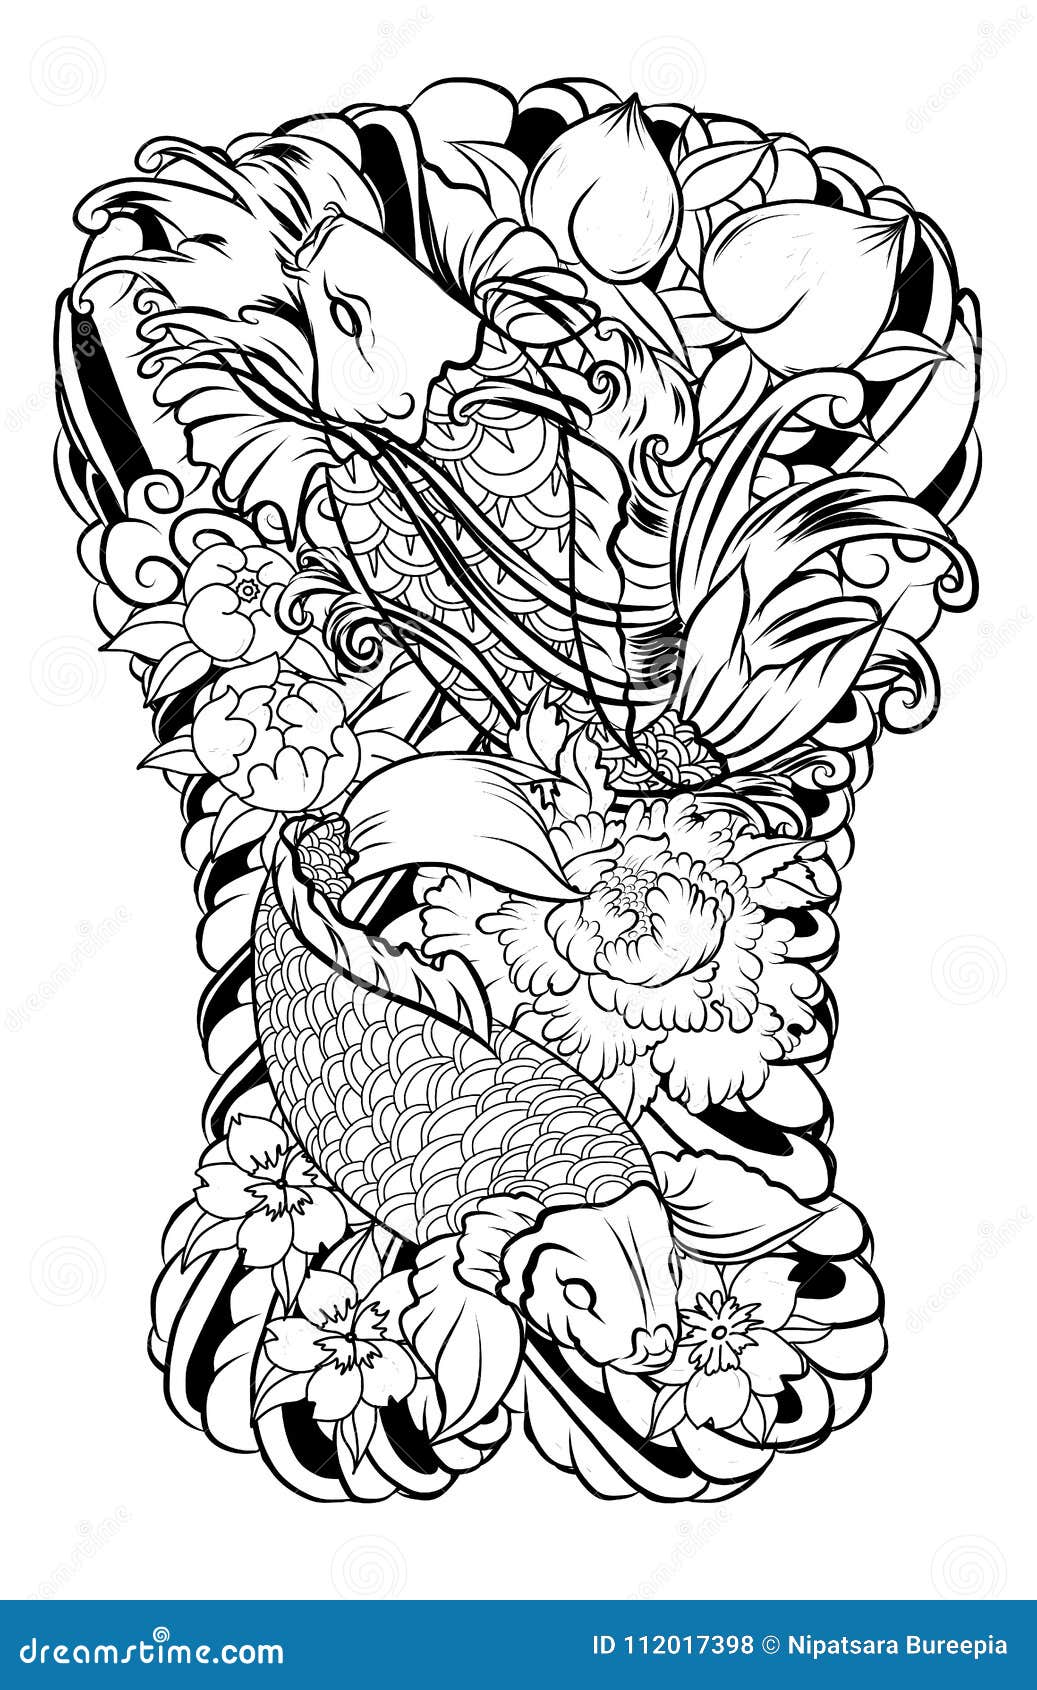 Koi Fish Tattoo Design Ideas and Pictures  Tattdiz